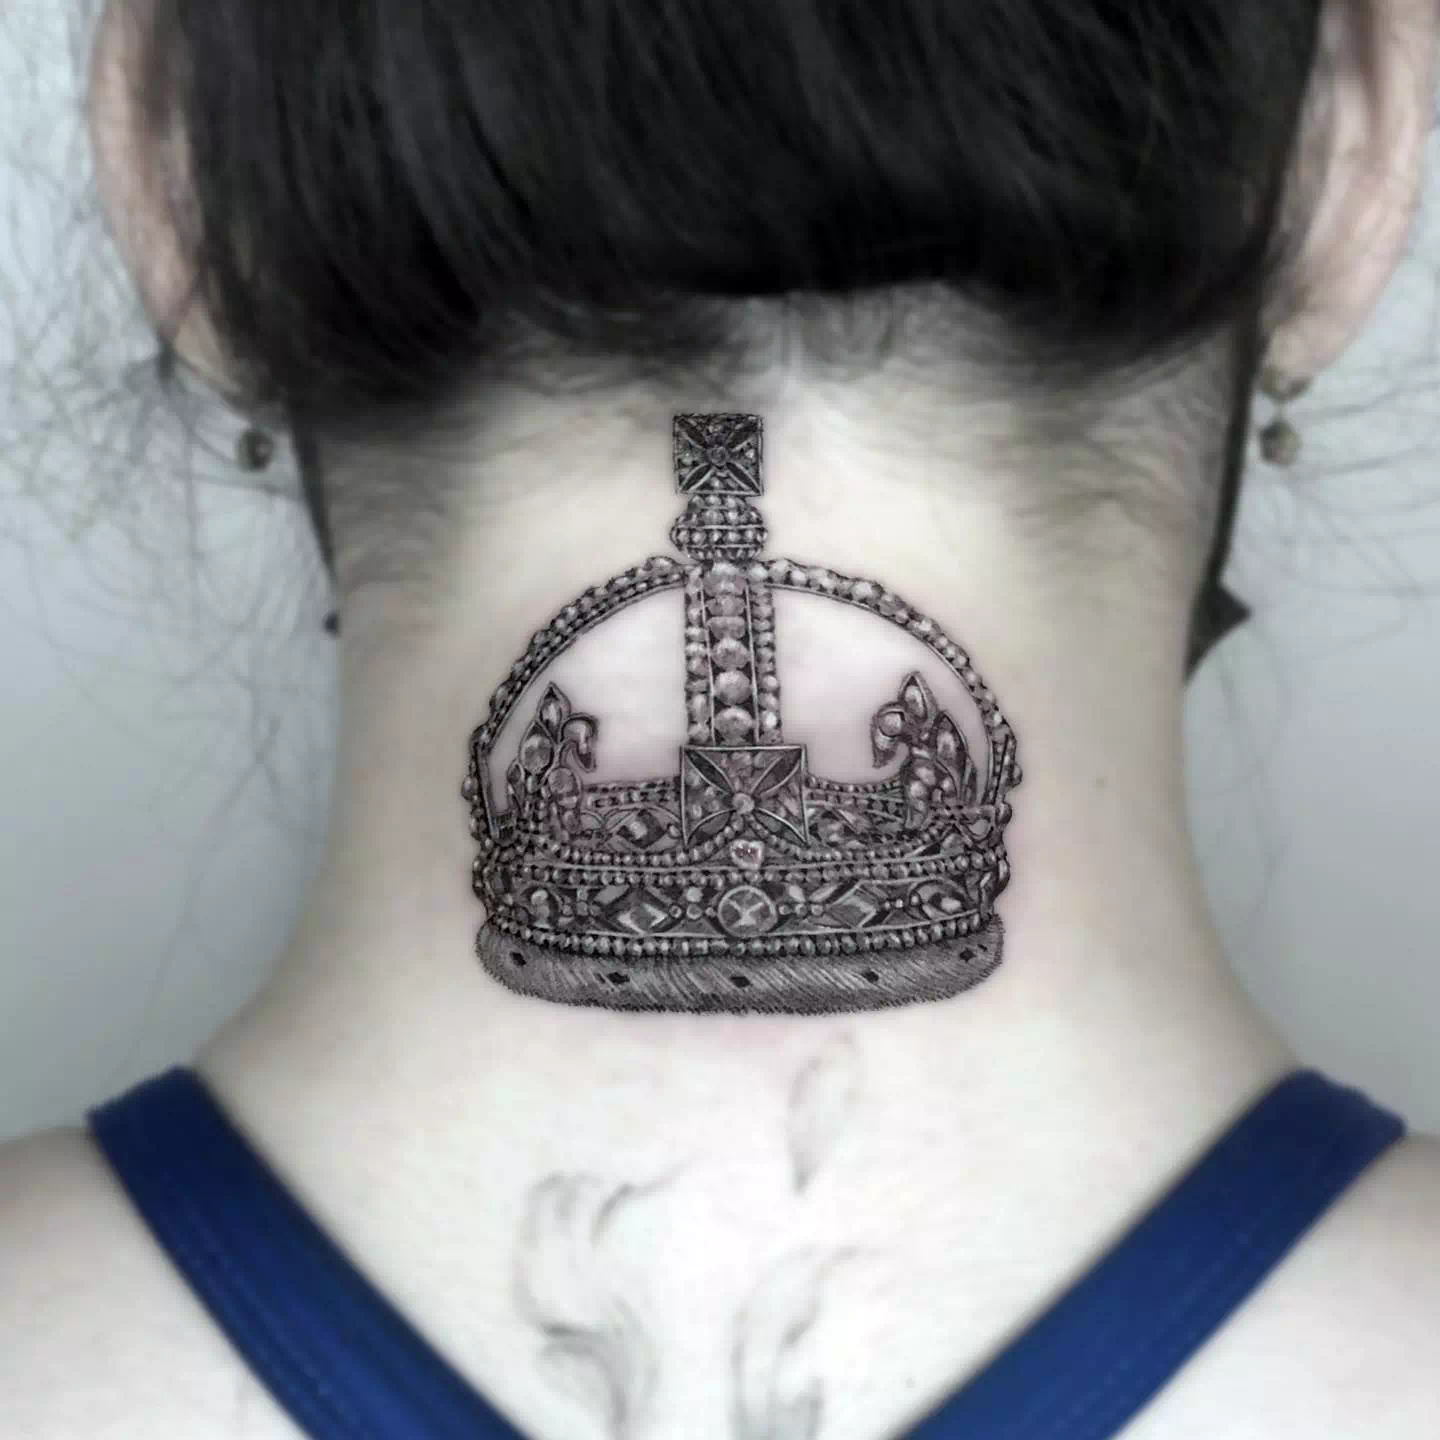 Tatuaje de la corona del cuello 2